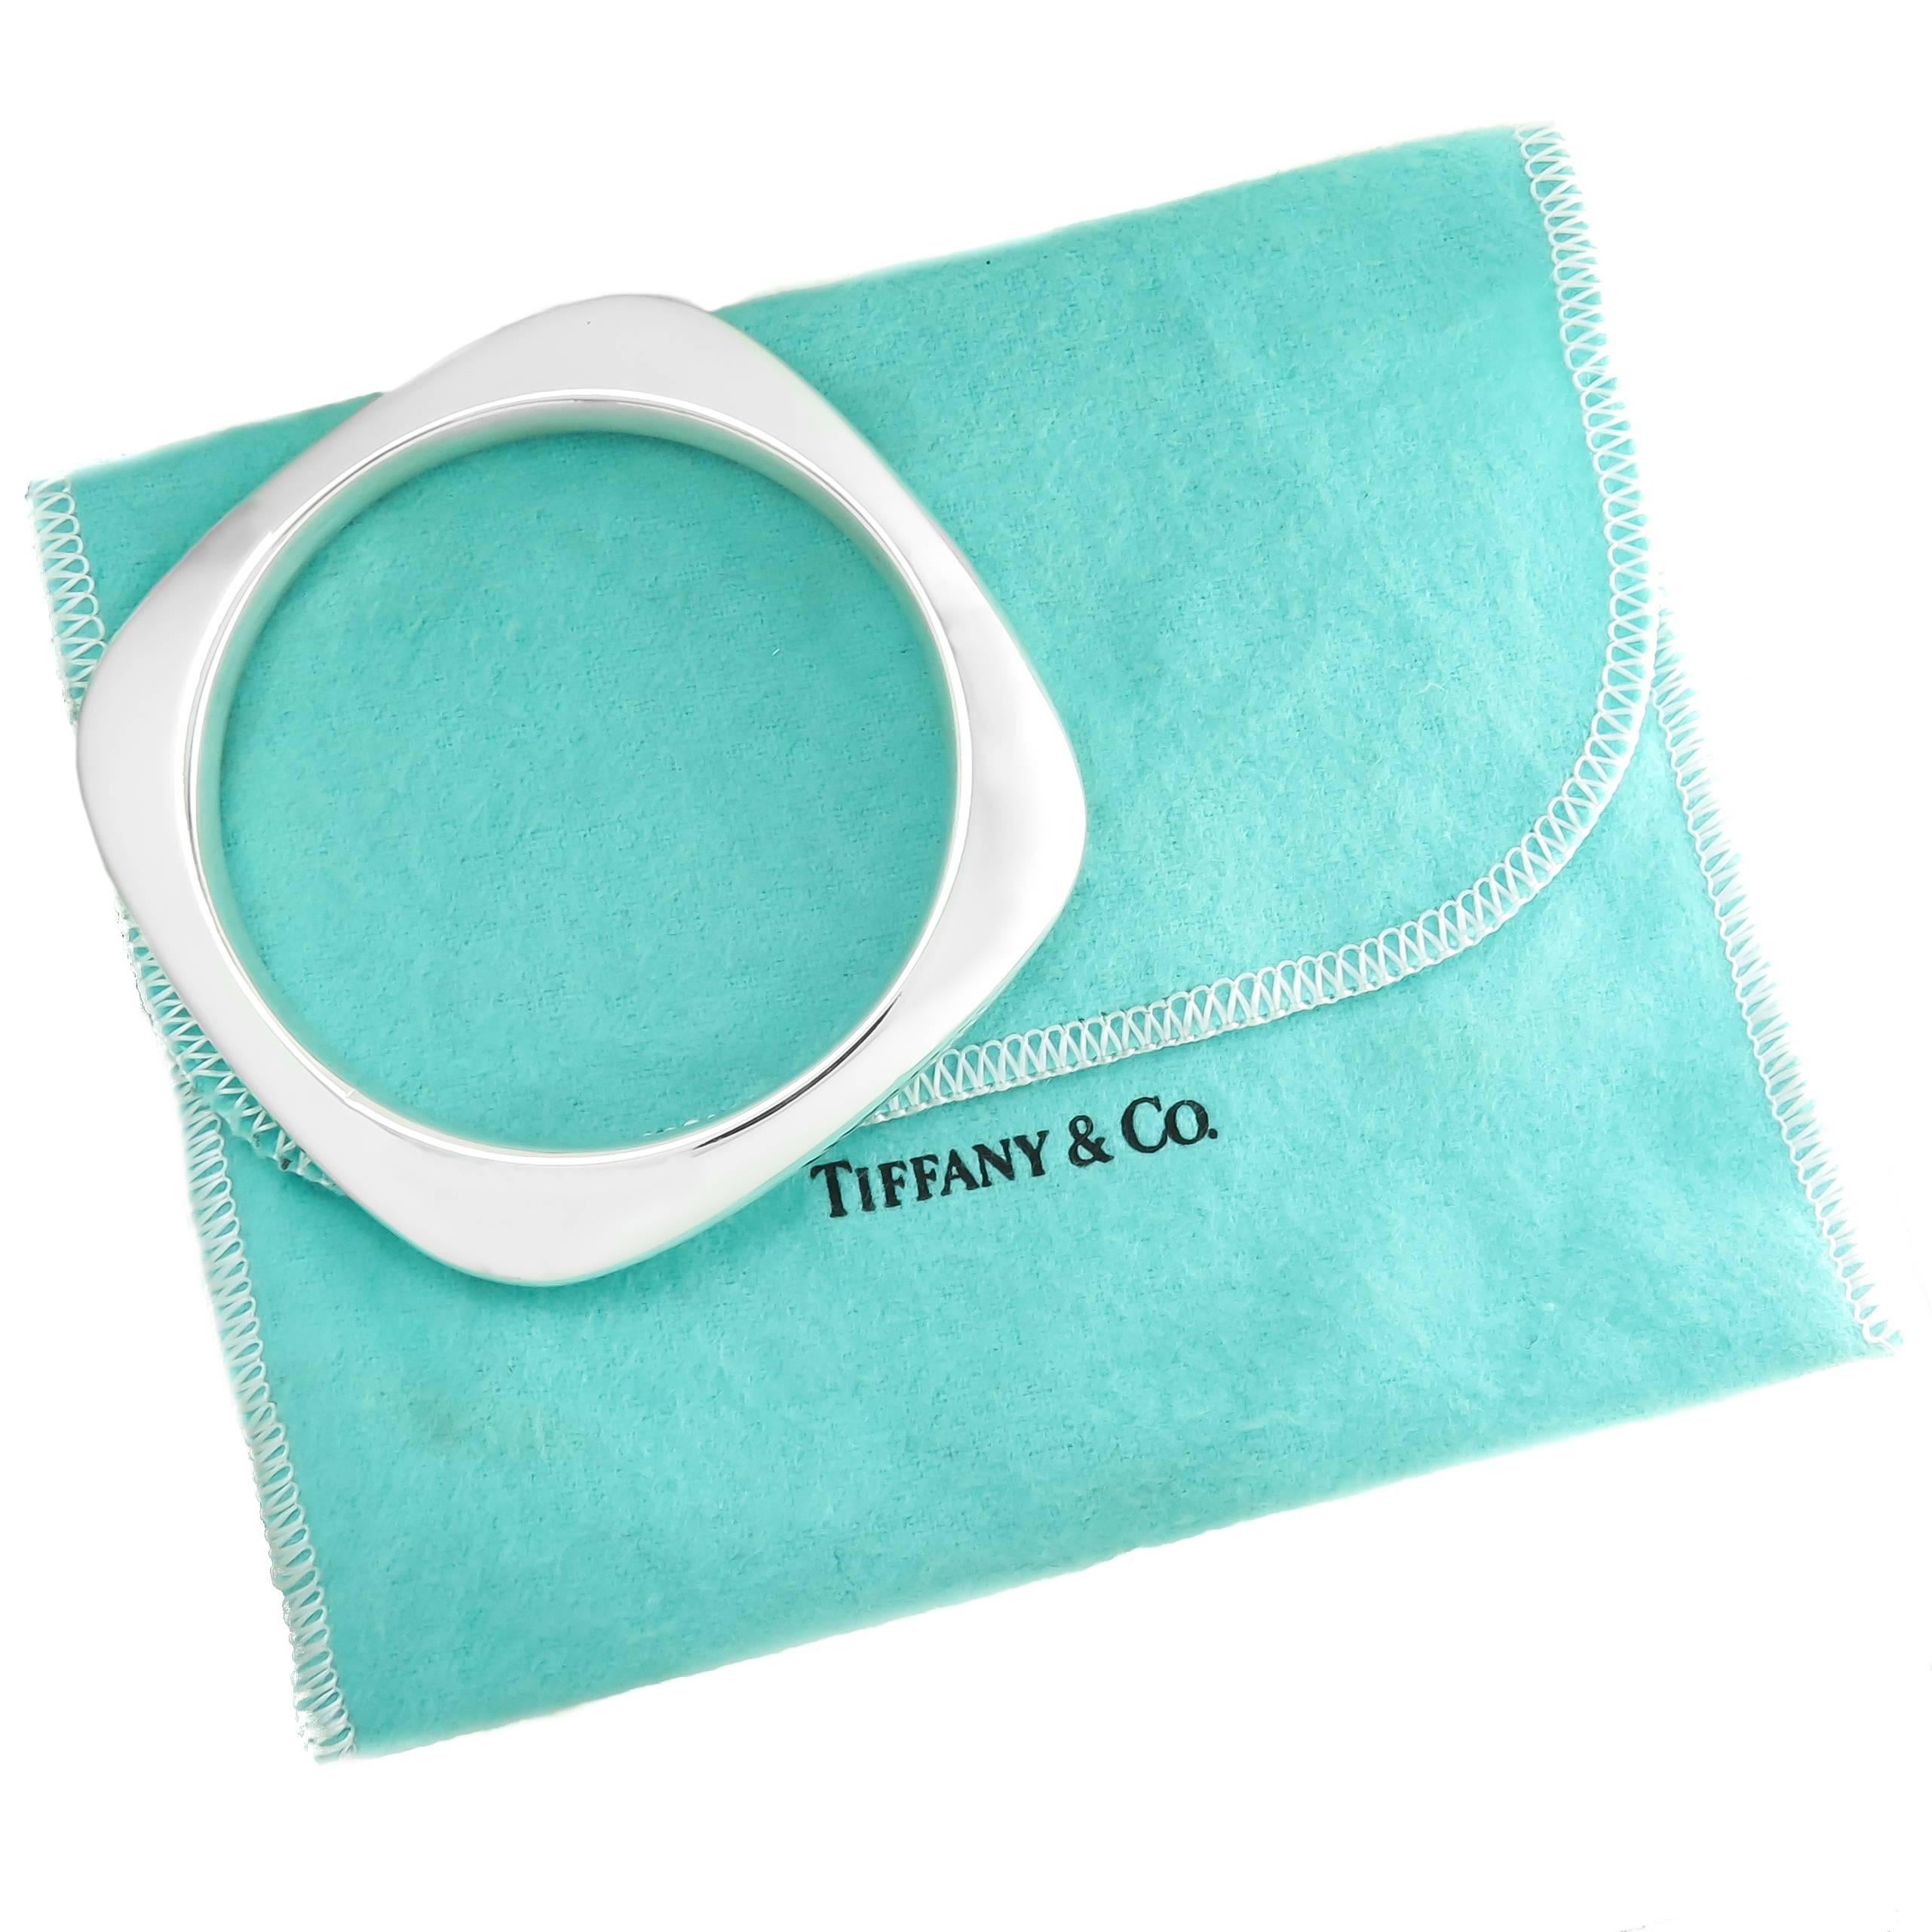 Women's or Men's Tiffany & Co. Silver Square Cushion Bangle Bracelet